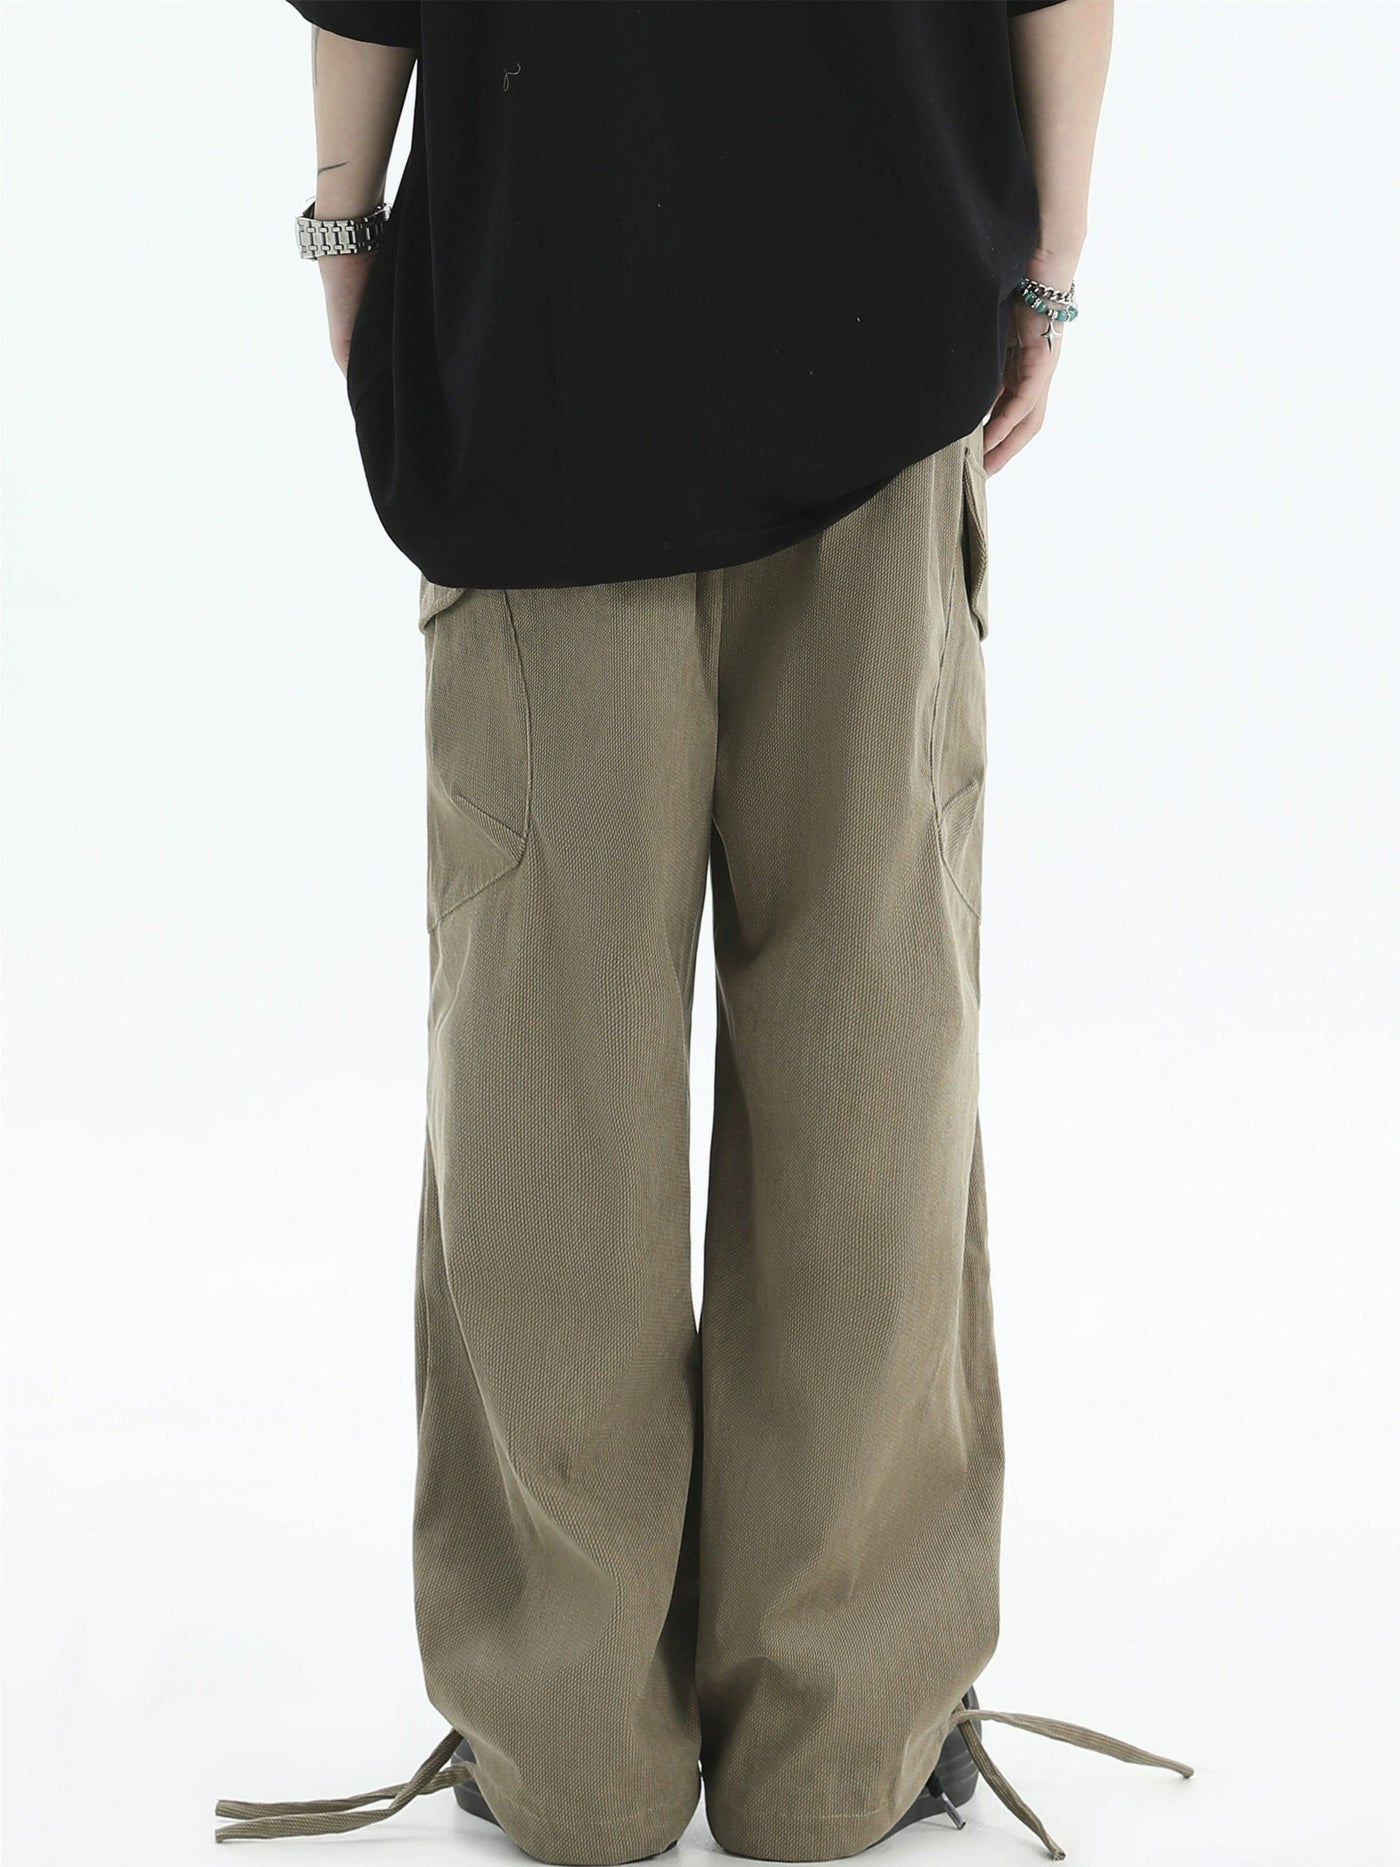 Drawstring Big Pocket Loose Pants Korean Street Fashion Pants By INS Korea Shop Online at OH Vault